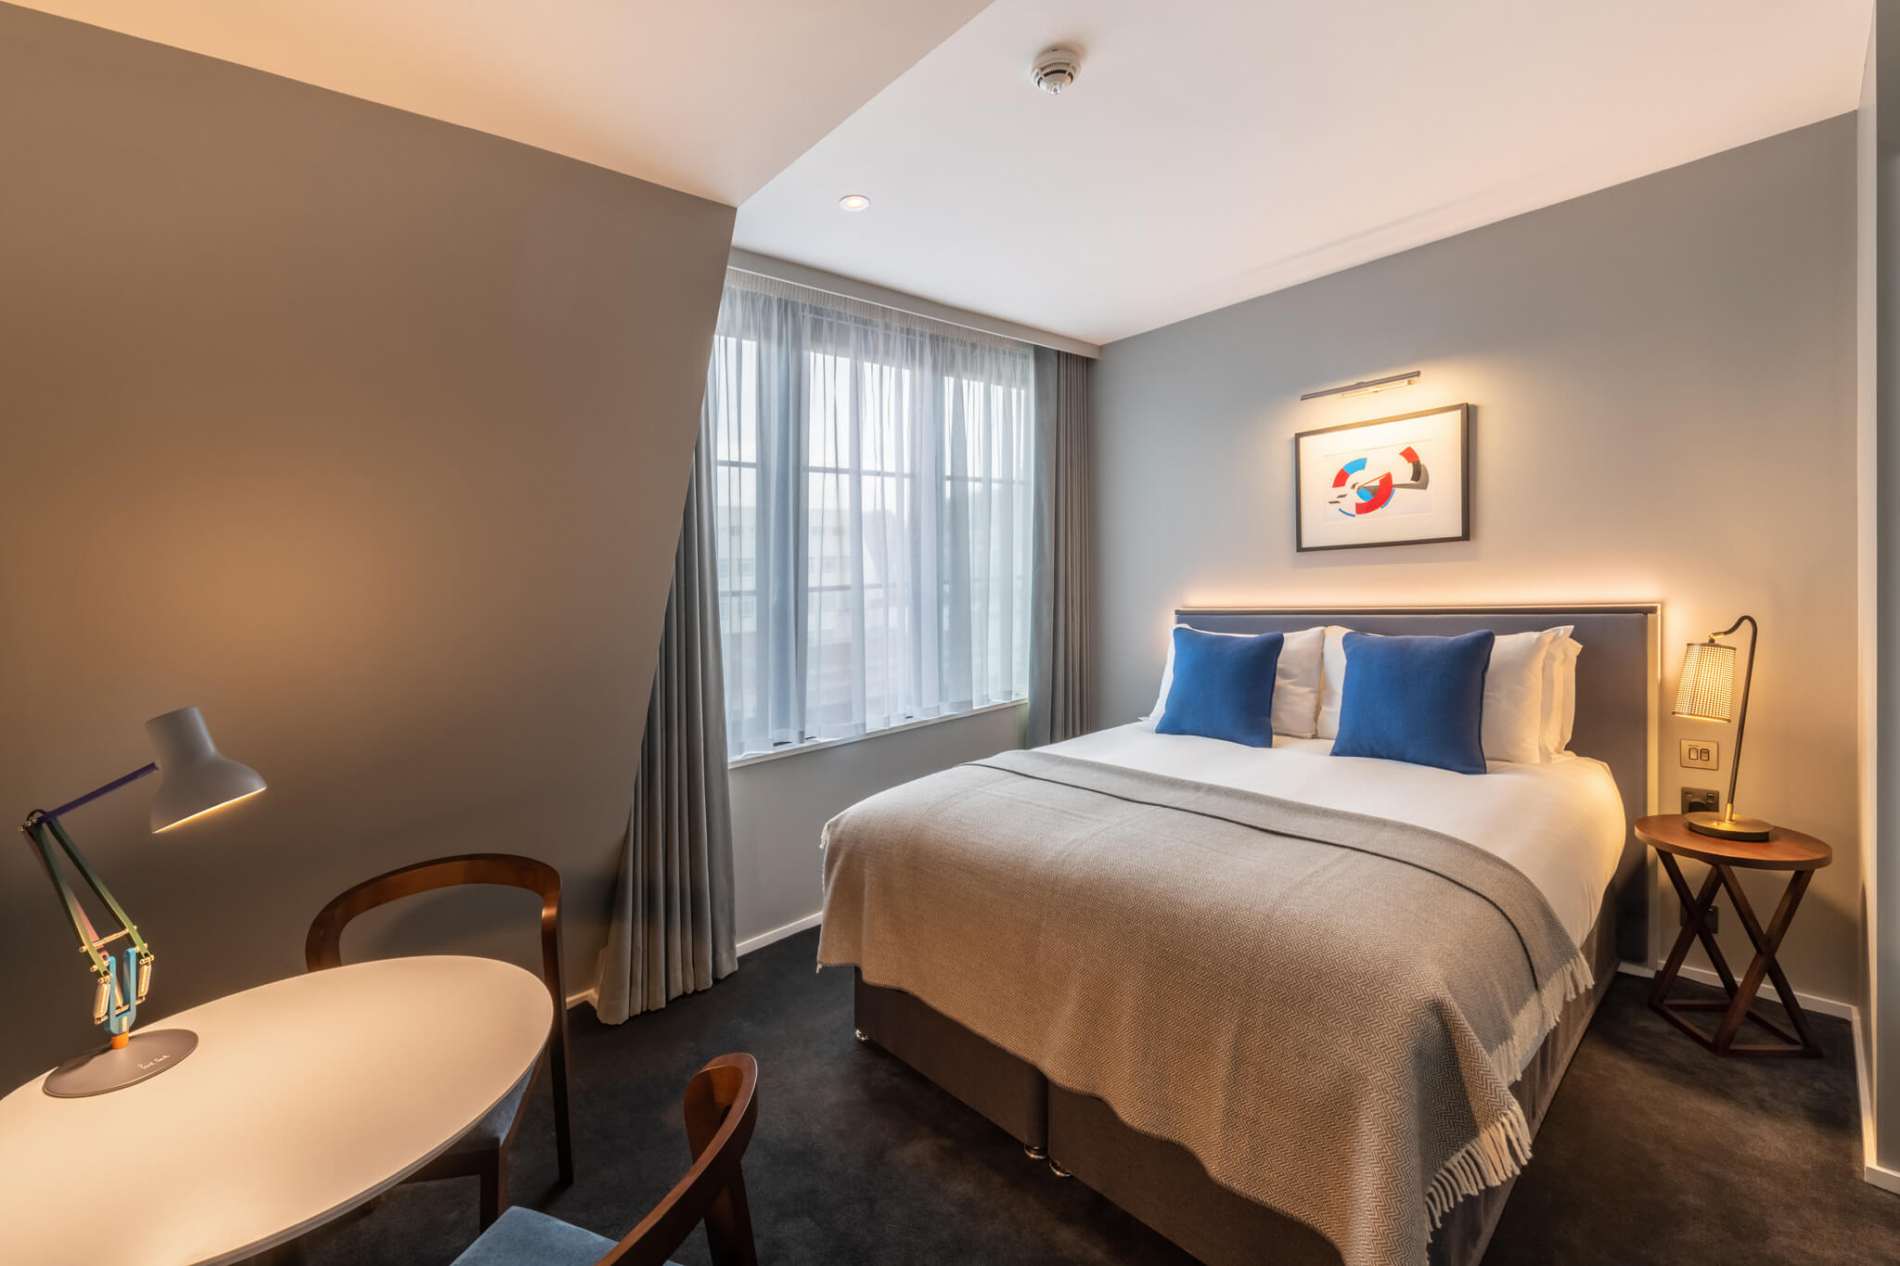 Nadler Hotels Open Flagship Site In Covent Garden Hotelrez Blog